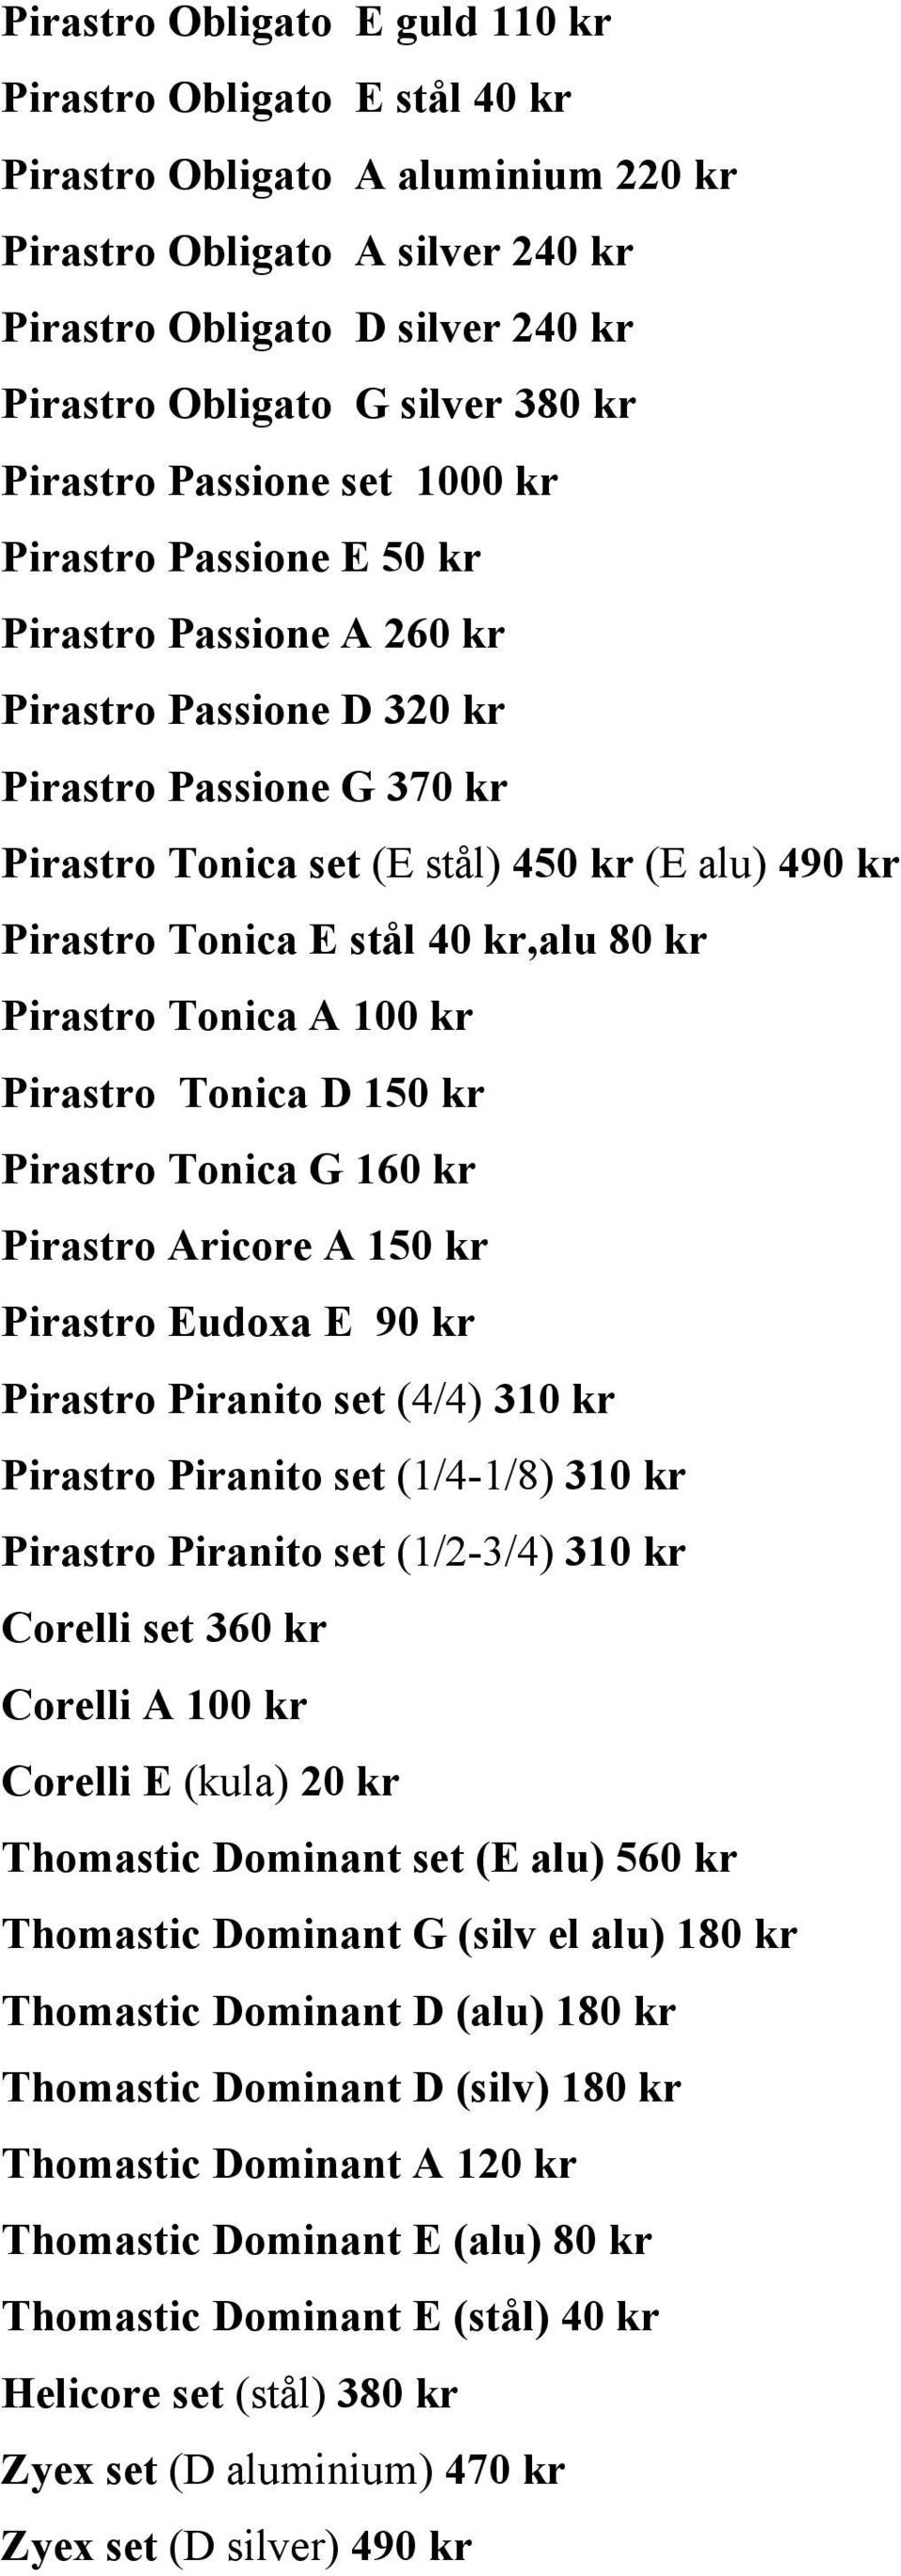 Tonica E stål 40 kr,alu 80 kr Pirastro Tonica A 100 kr Pirastro Tonica D 150 kr Pirastro Tonica G 160 kr Pirastro Aricore A 150 kr Pirastro Eudoxa E 90 kr Pirastro Piranito set (4/4) 310 kr Pirastro